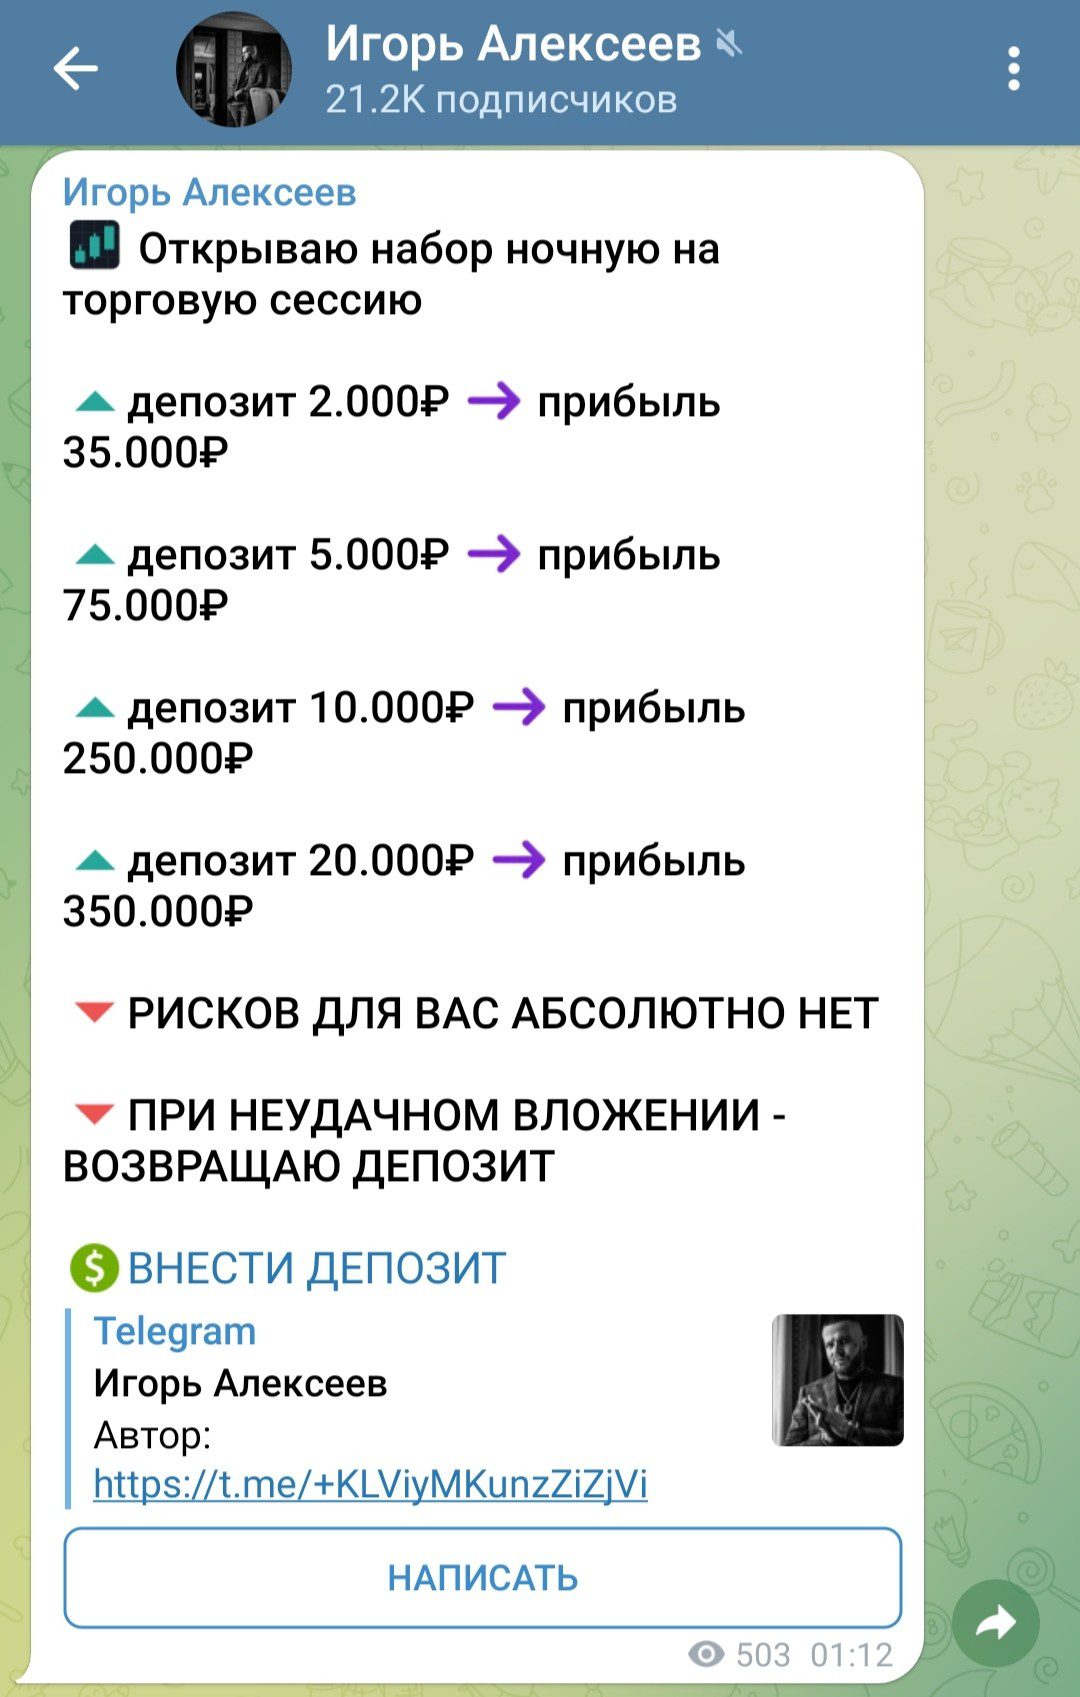 Игорь Алексеев телеграм условия